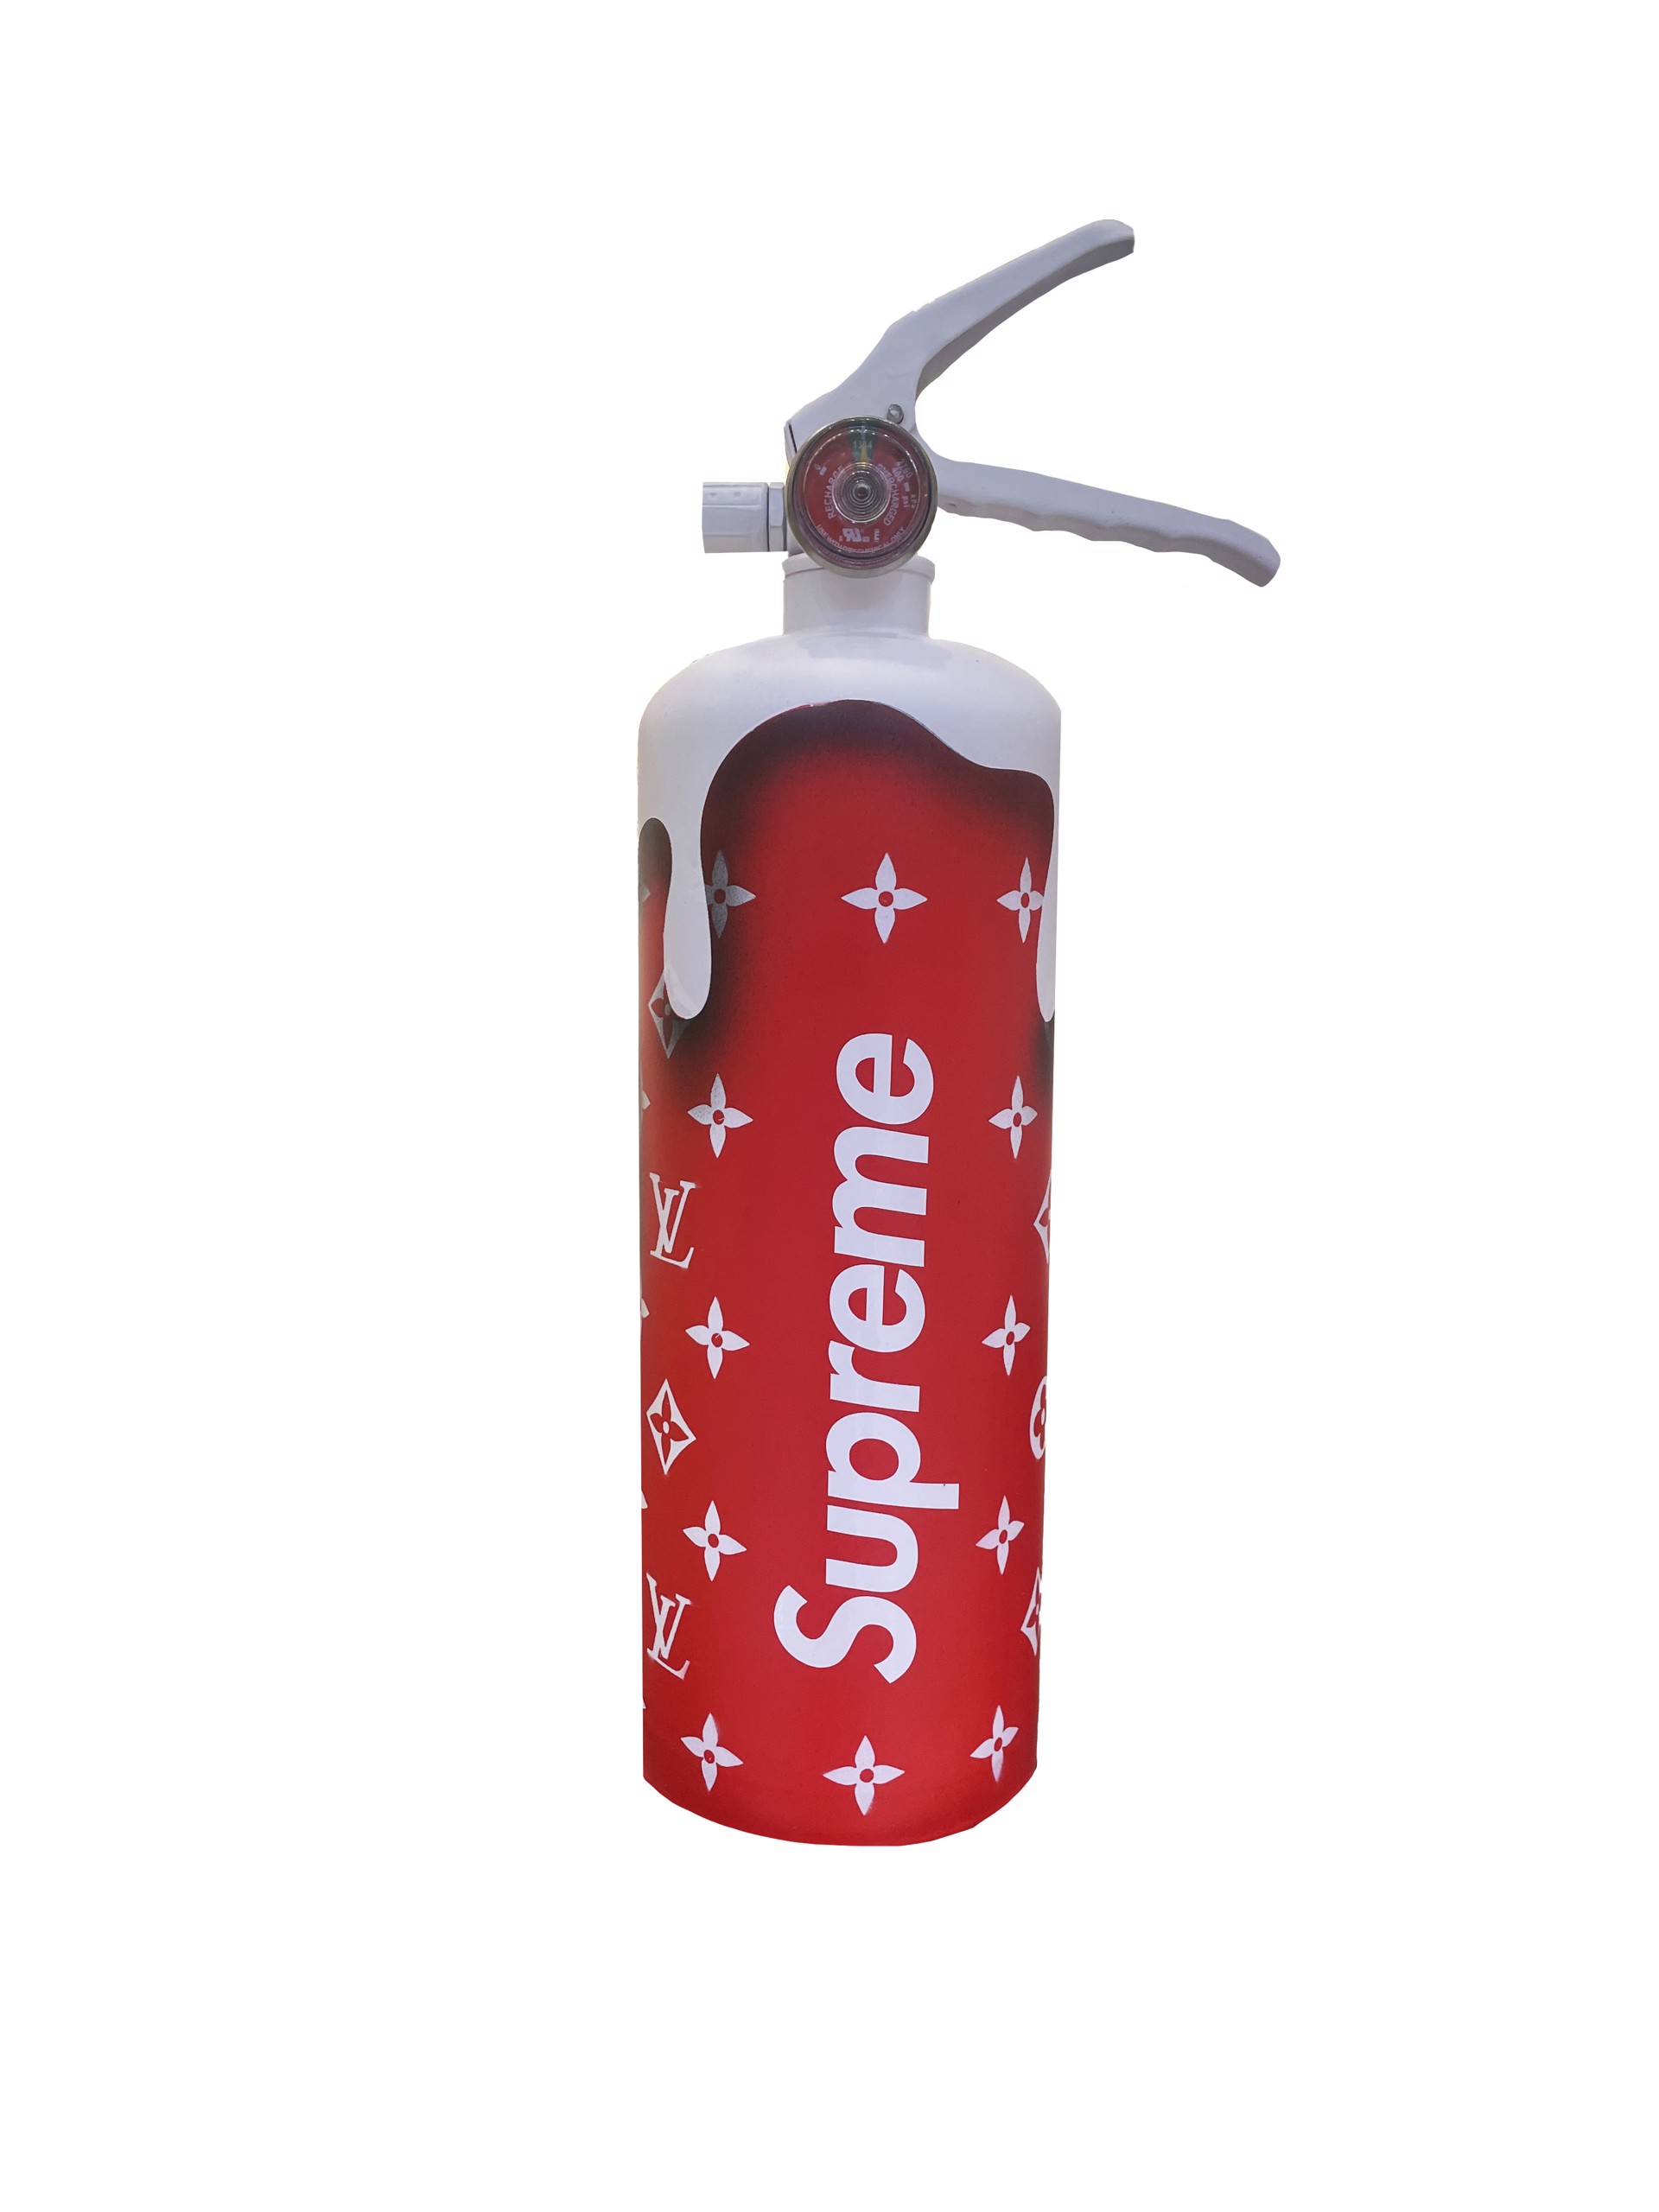 Supreme Fire Extinguisher by David Mir